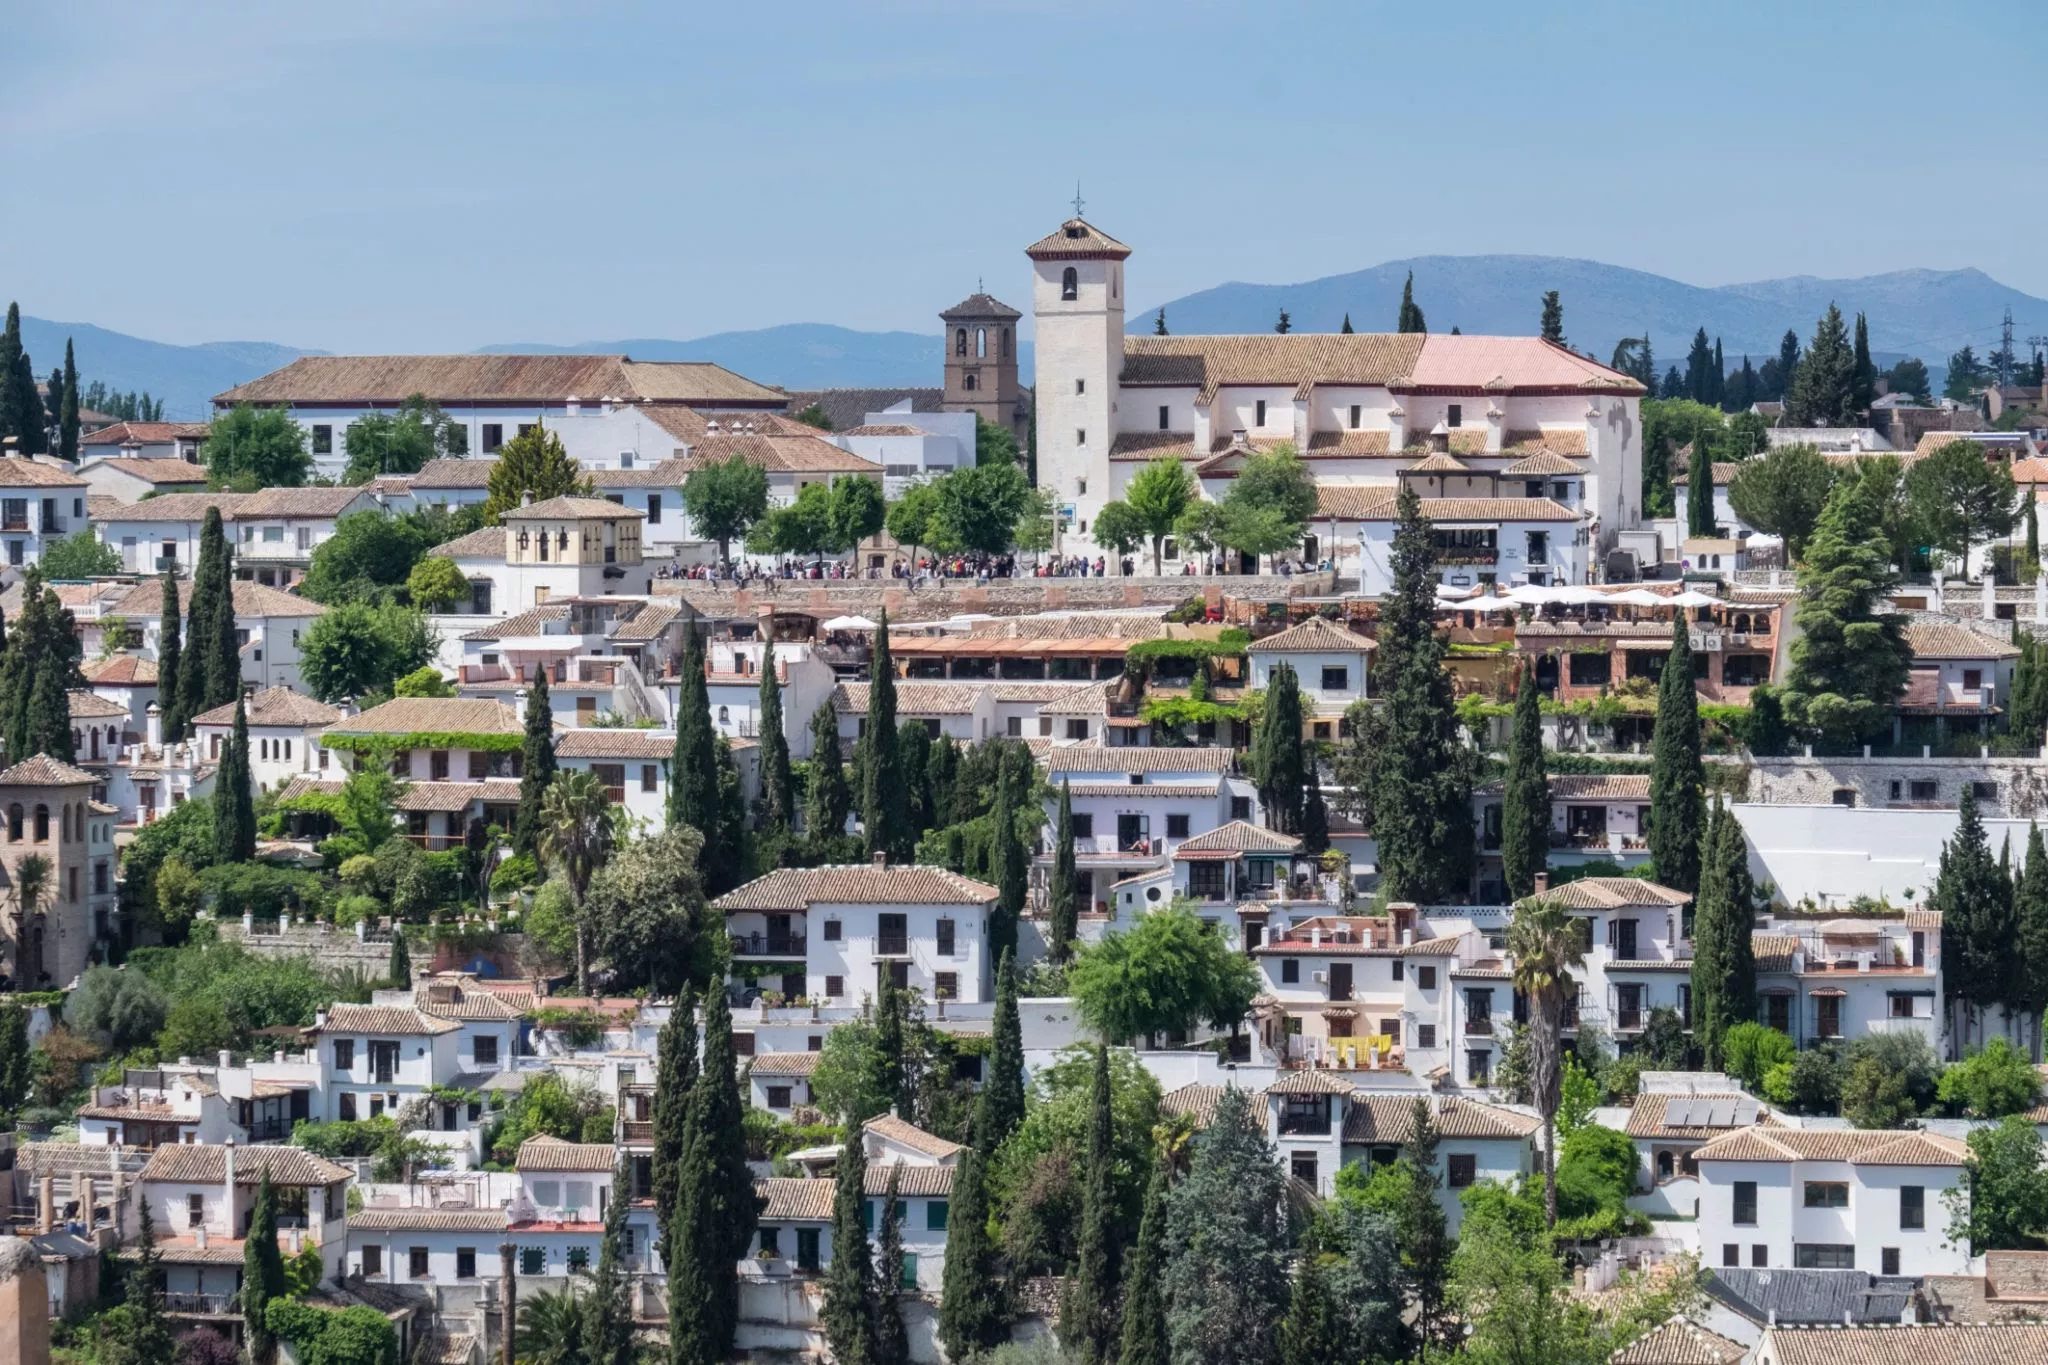 Mirador San Nicolas in Spain, Europe | Observation Decks - Rated 4.8